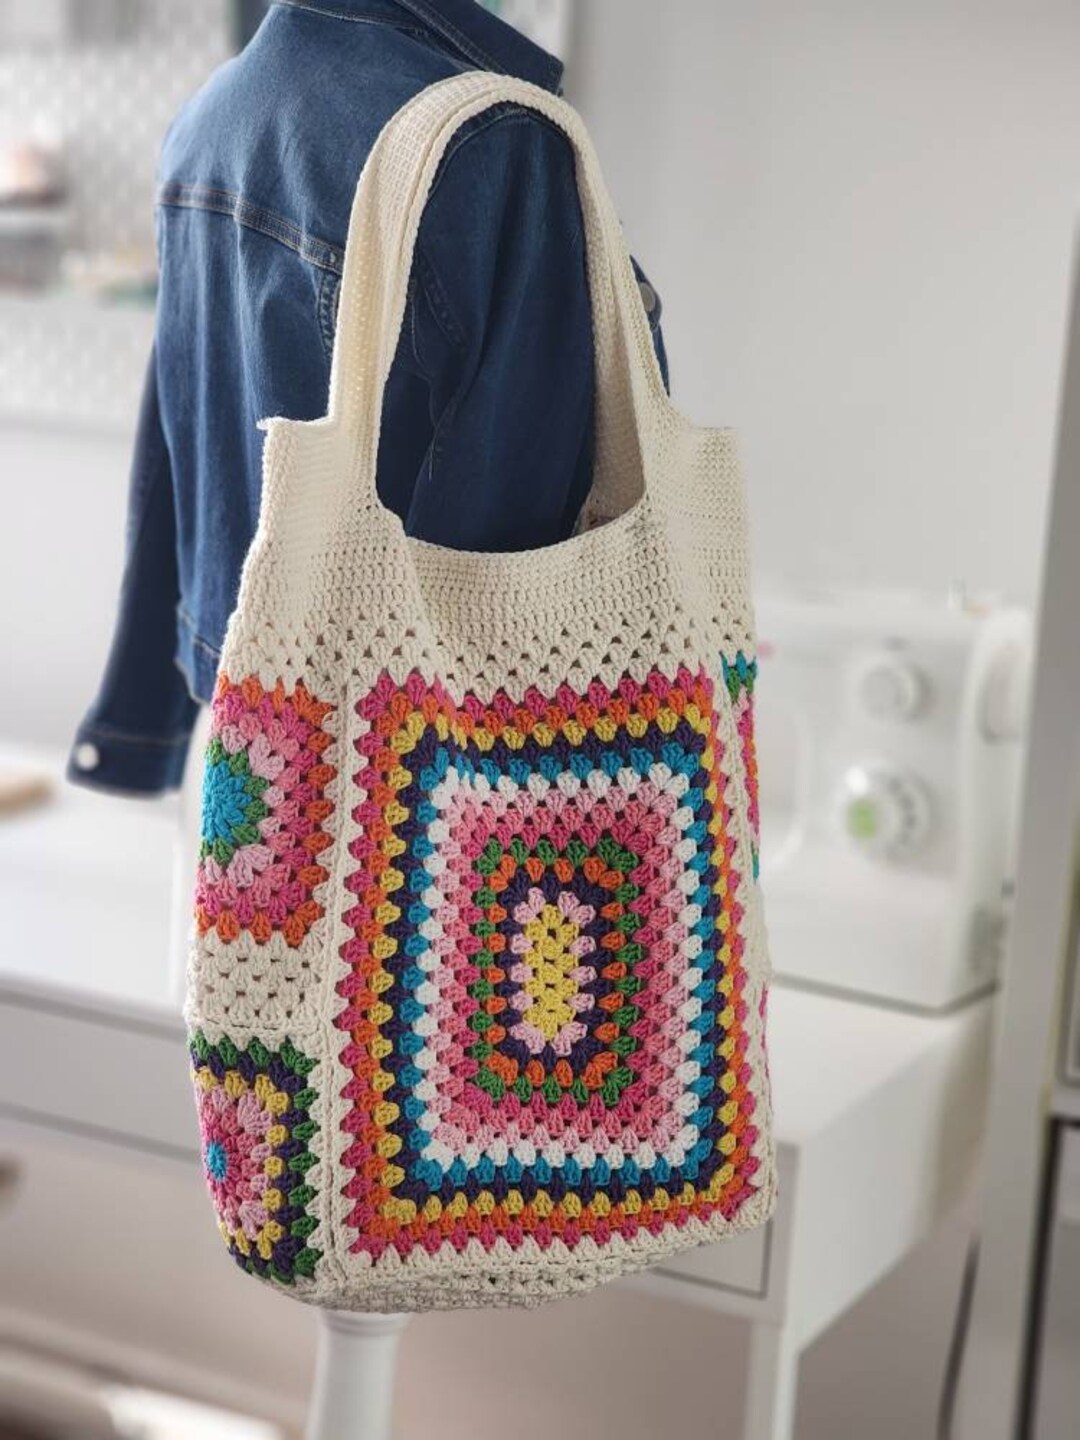 Ivory Tone Colorful Crochet Granny Square Shoulder Tote Bag - Etsy